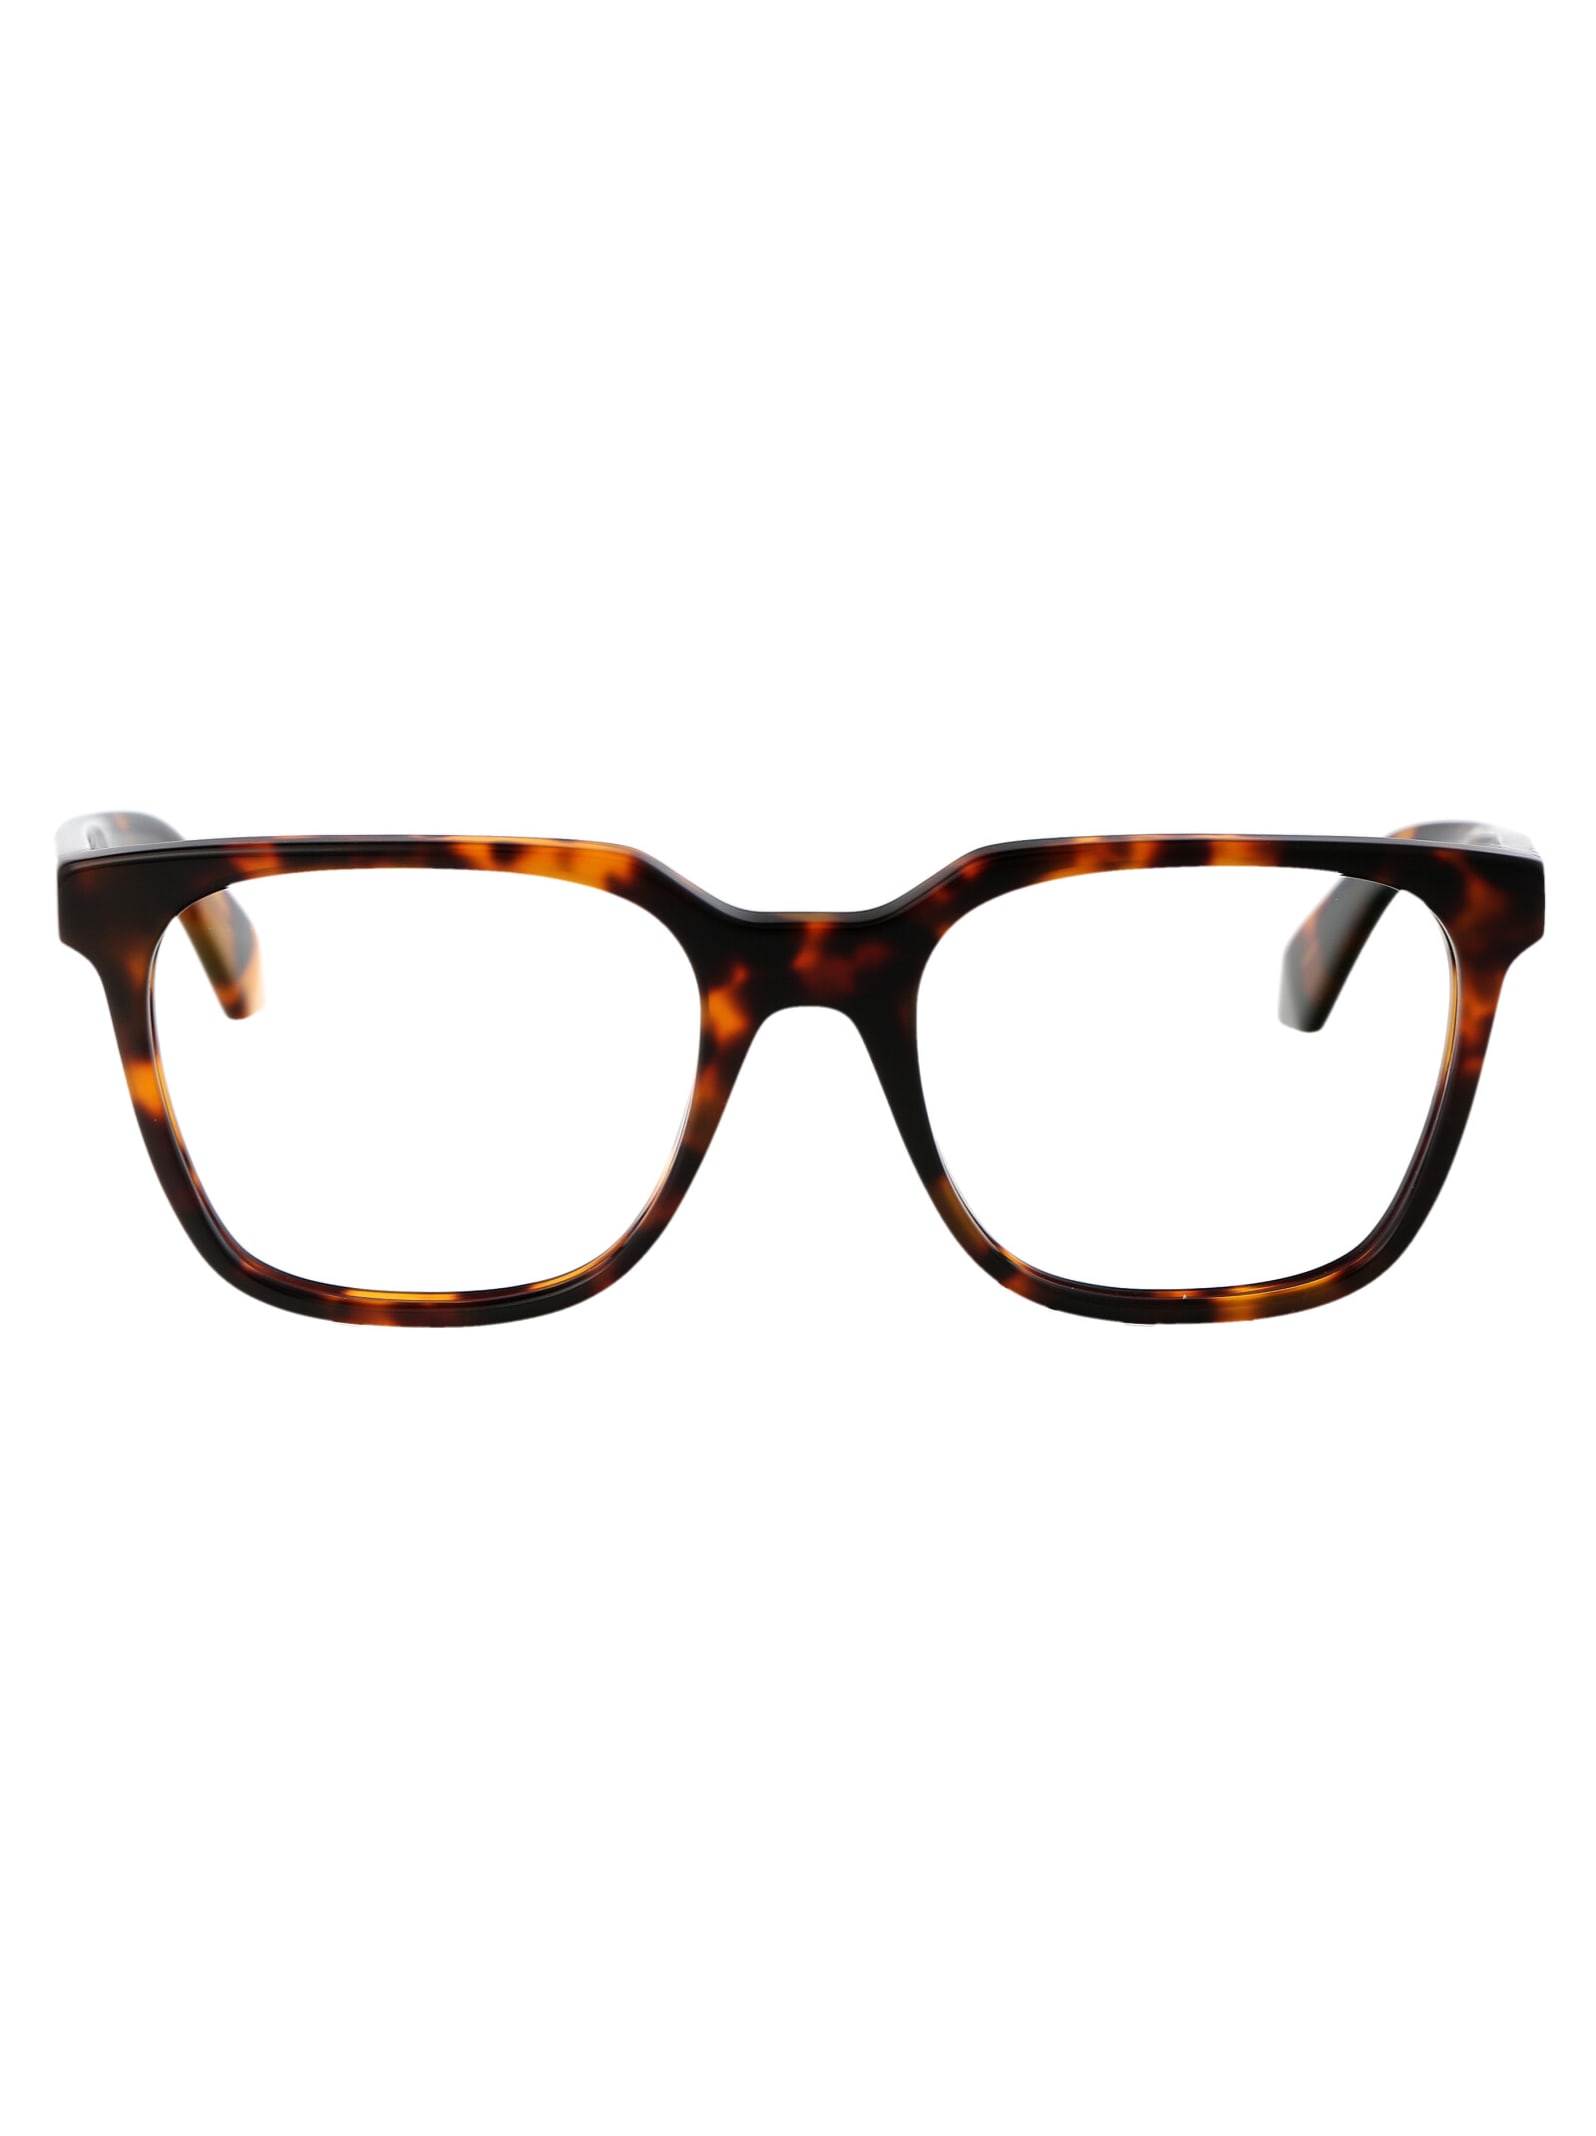 Optical Style 38 Glasses